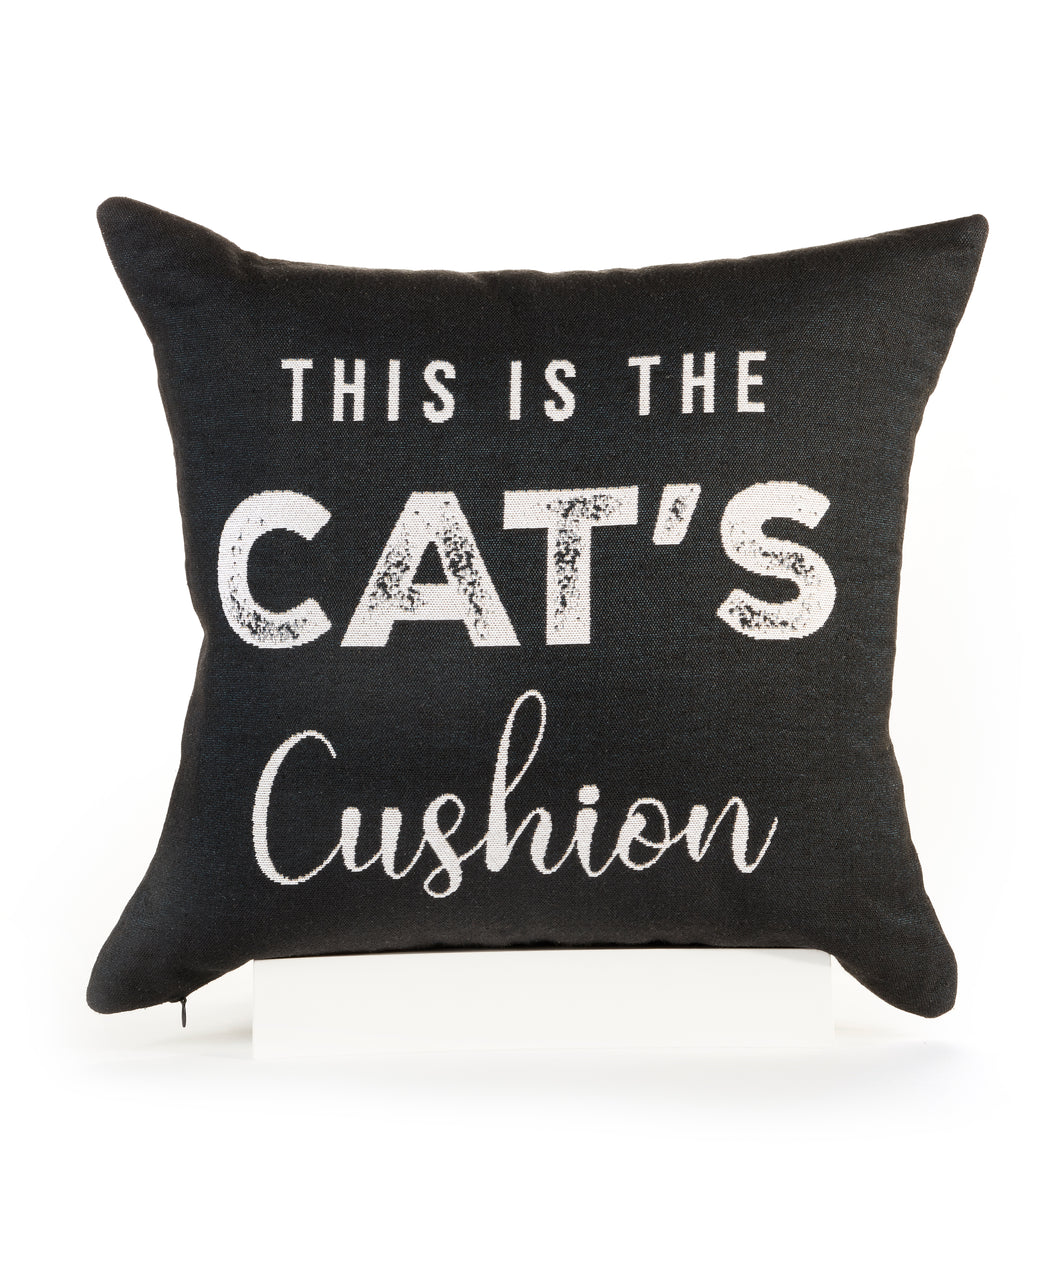 Cat's Cushion Pillow